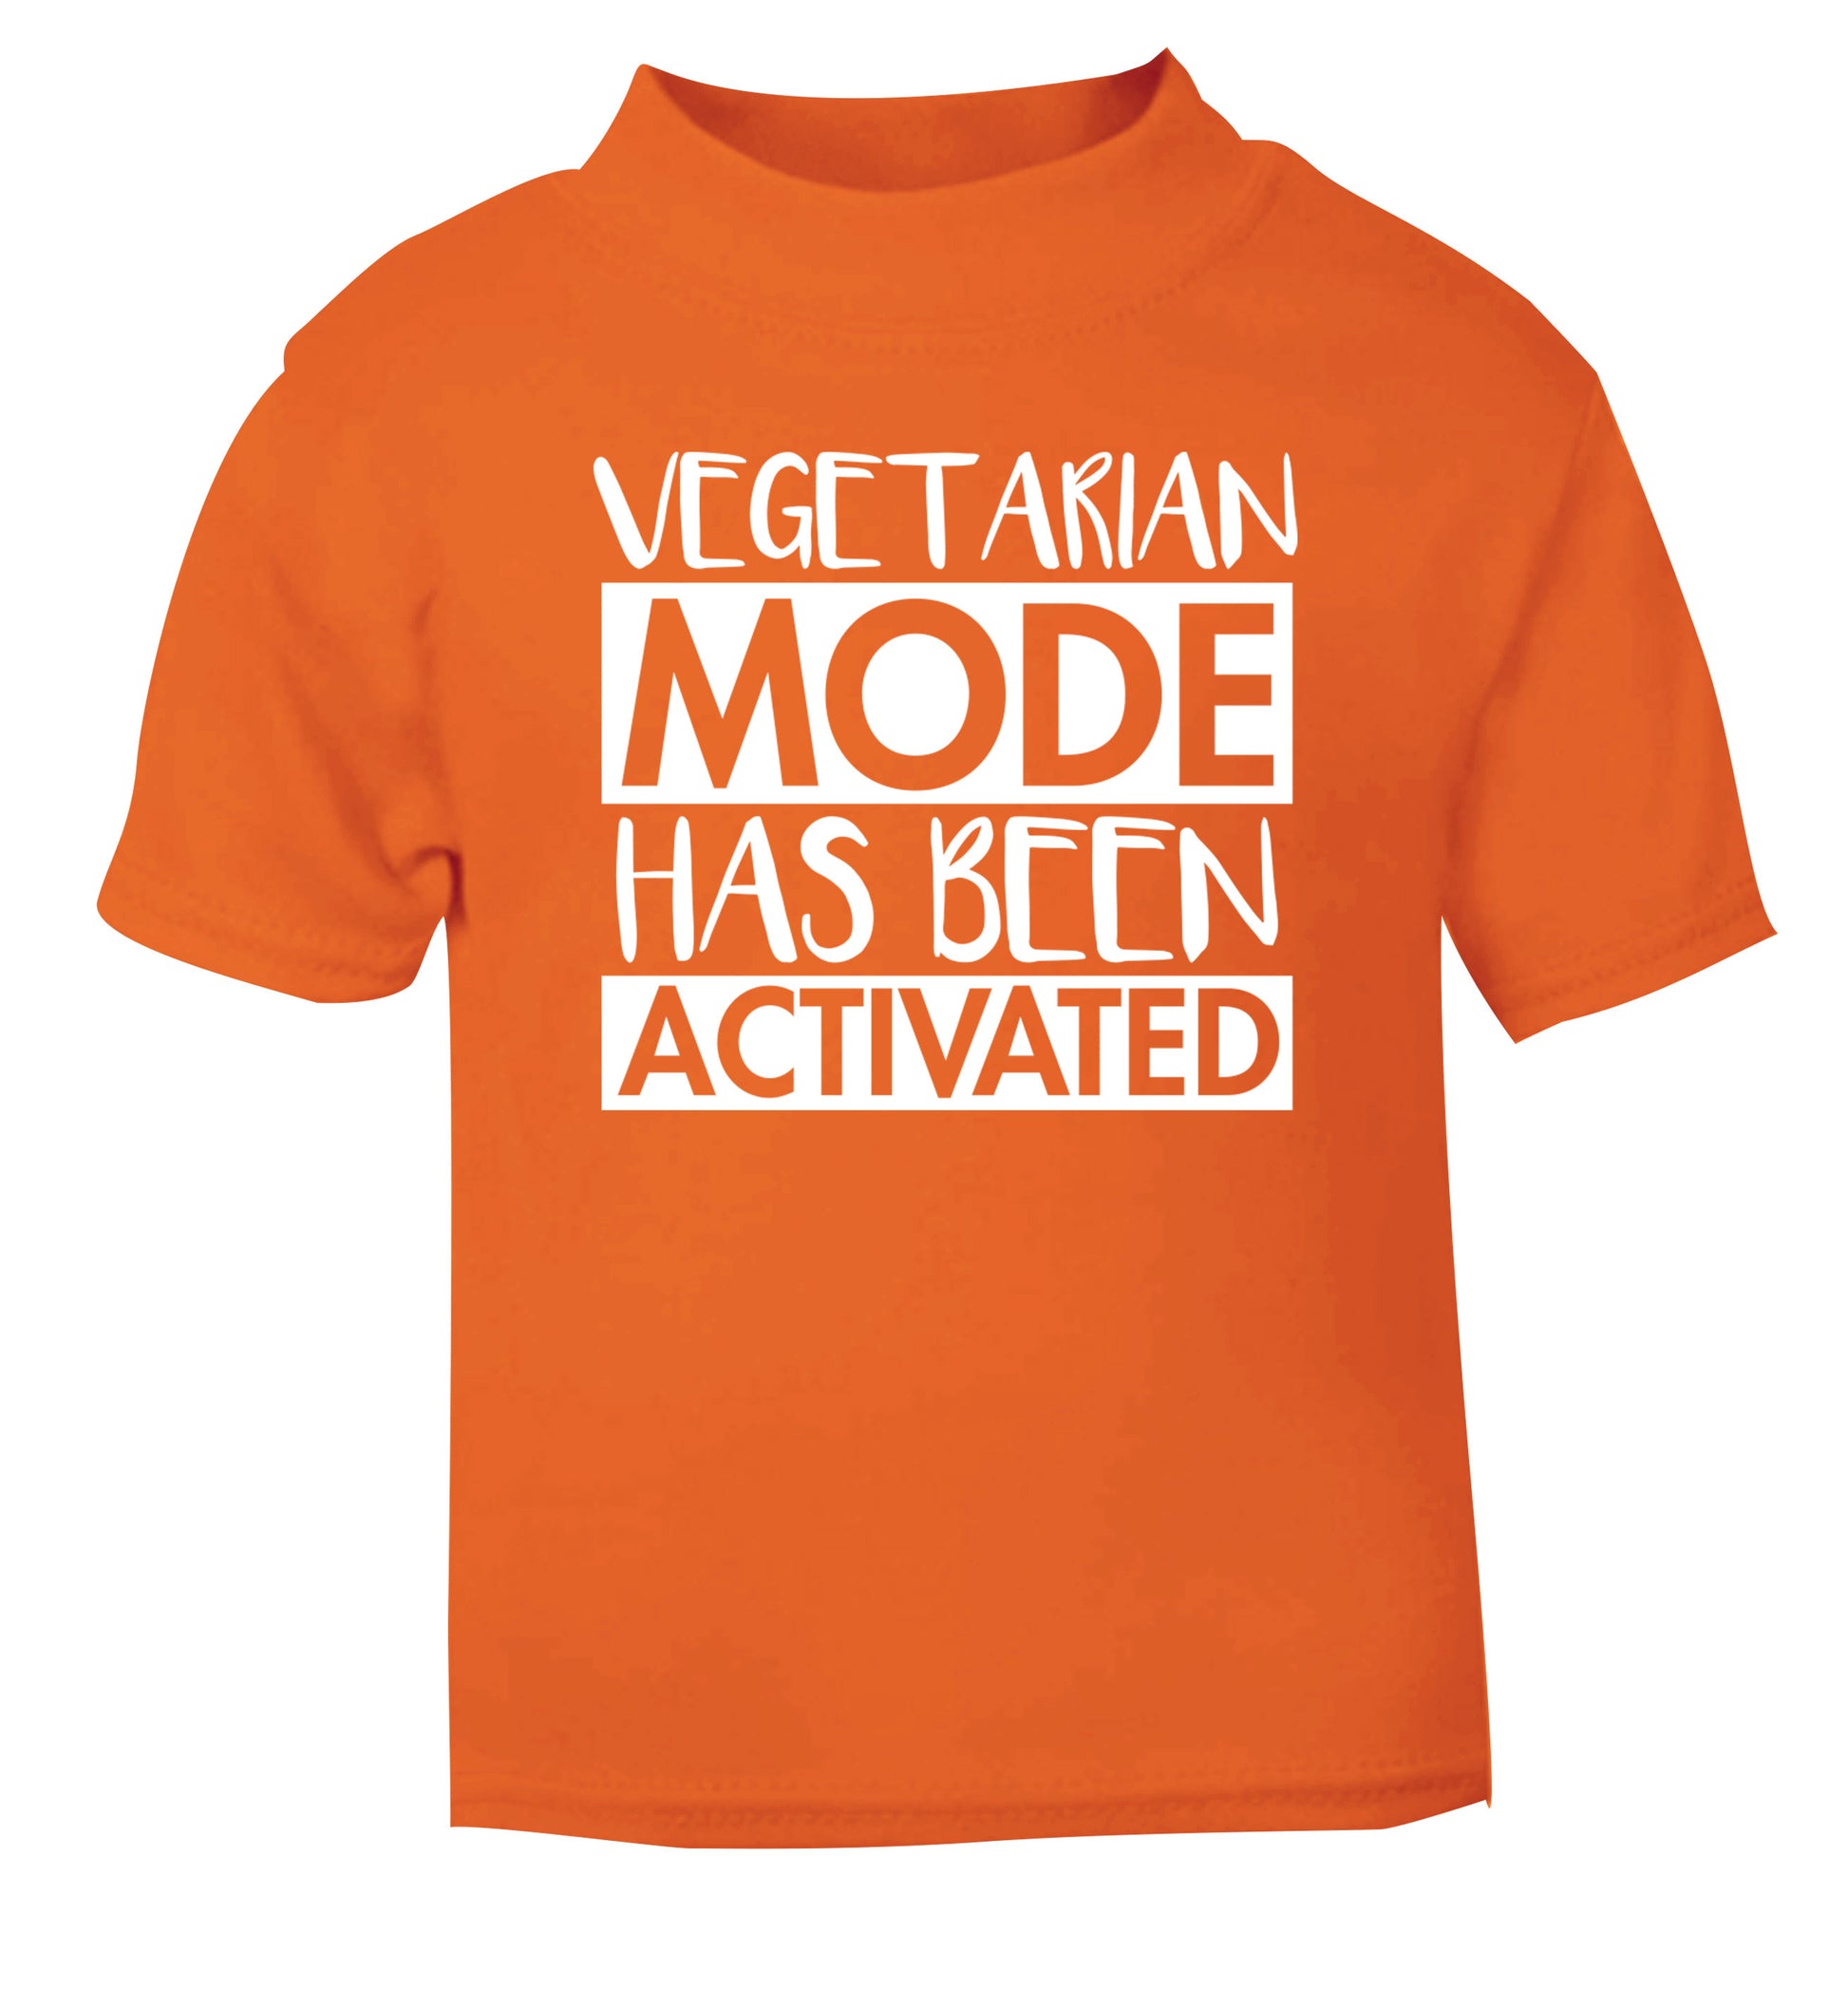 Vegetarian mode activated orange Baby Toddler Tshirt 2 Years